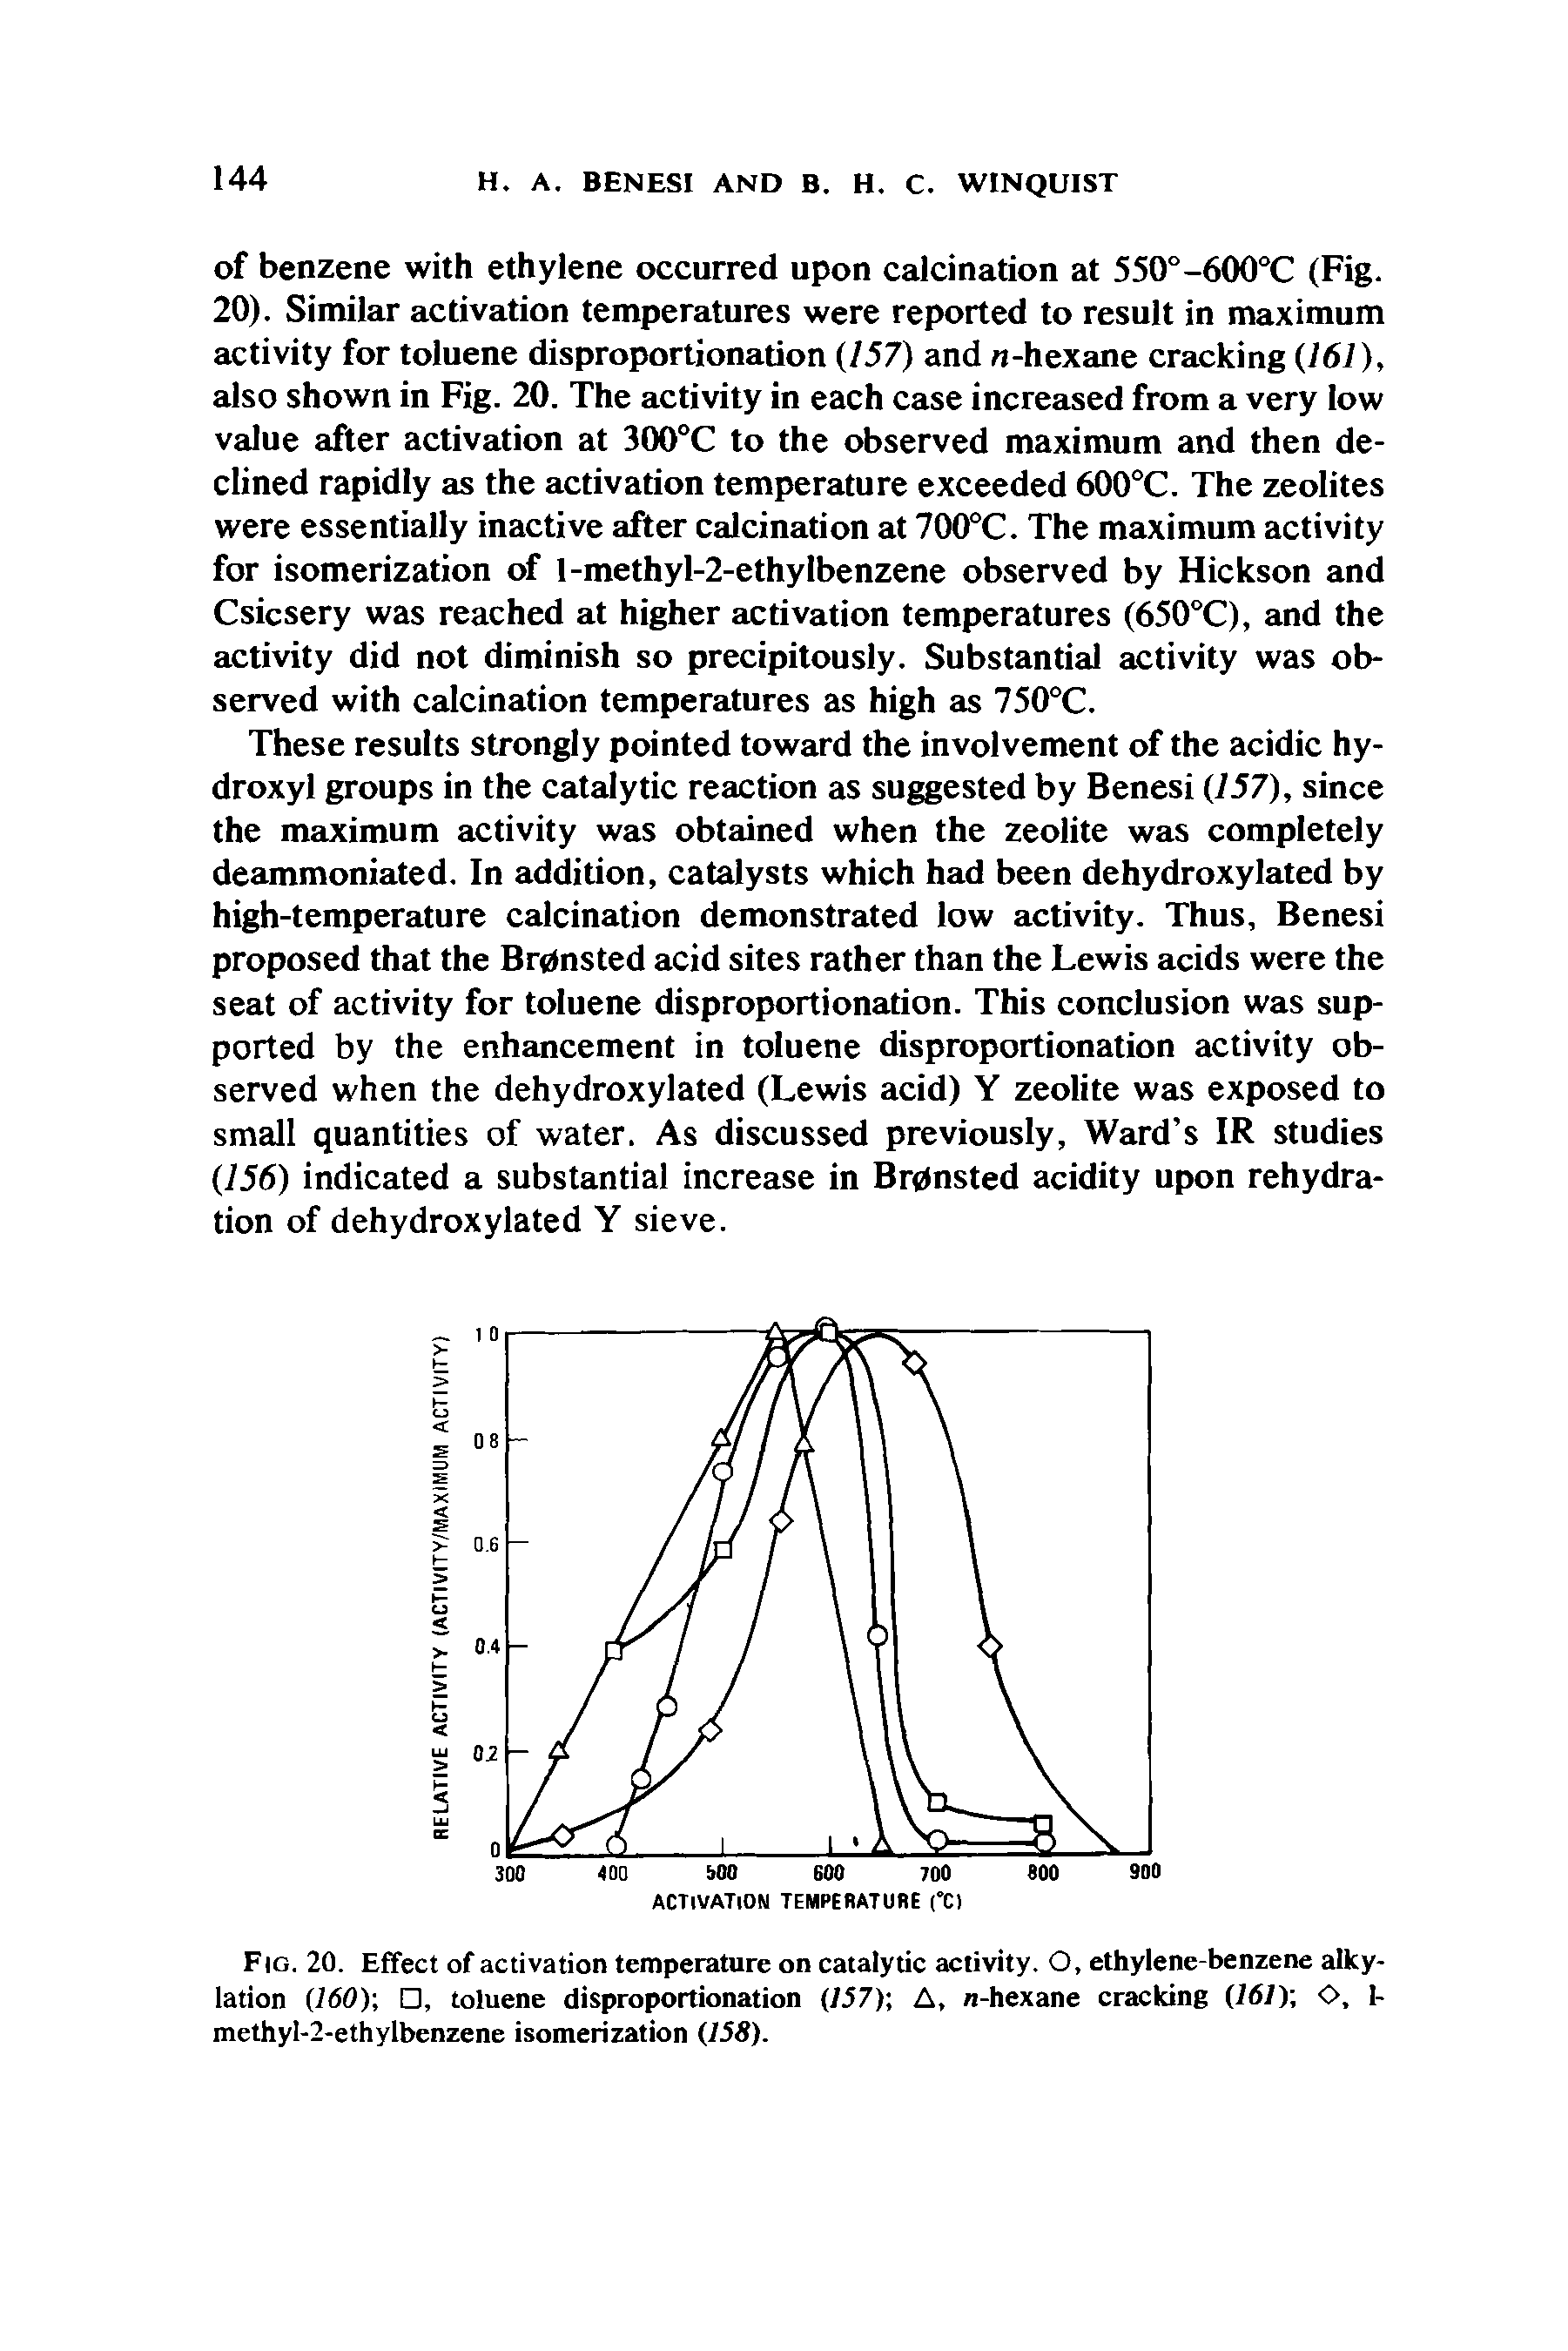 Fig. 20. Effect of activation temperature on catalytic activity. O, ethylene-benzene alkylation (160) , toluene disproportionation (157) A, n-hexane cracking (161) O, 1-methyl-2-ethylbenzene isomerization (158).